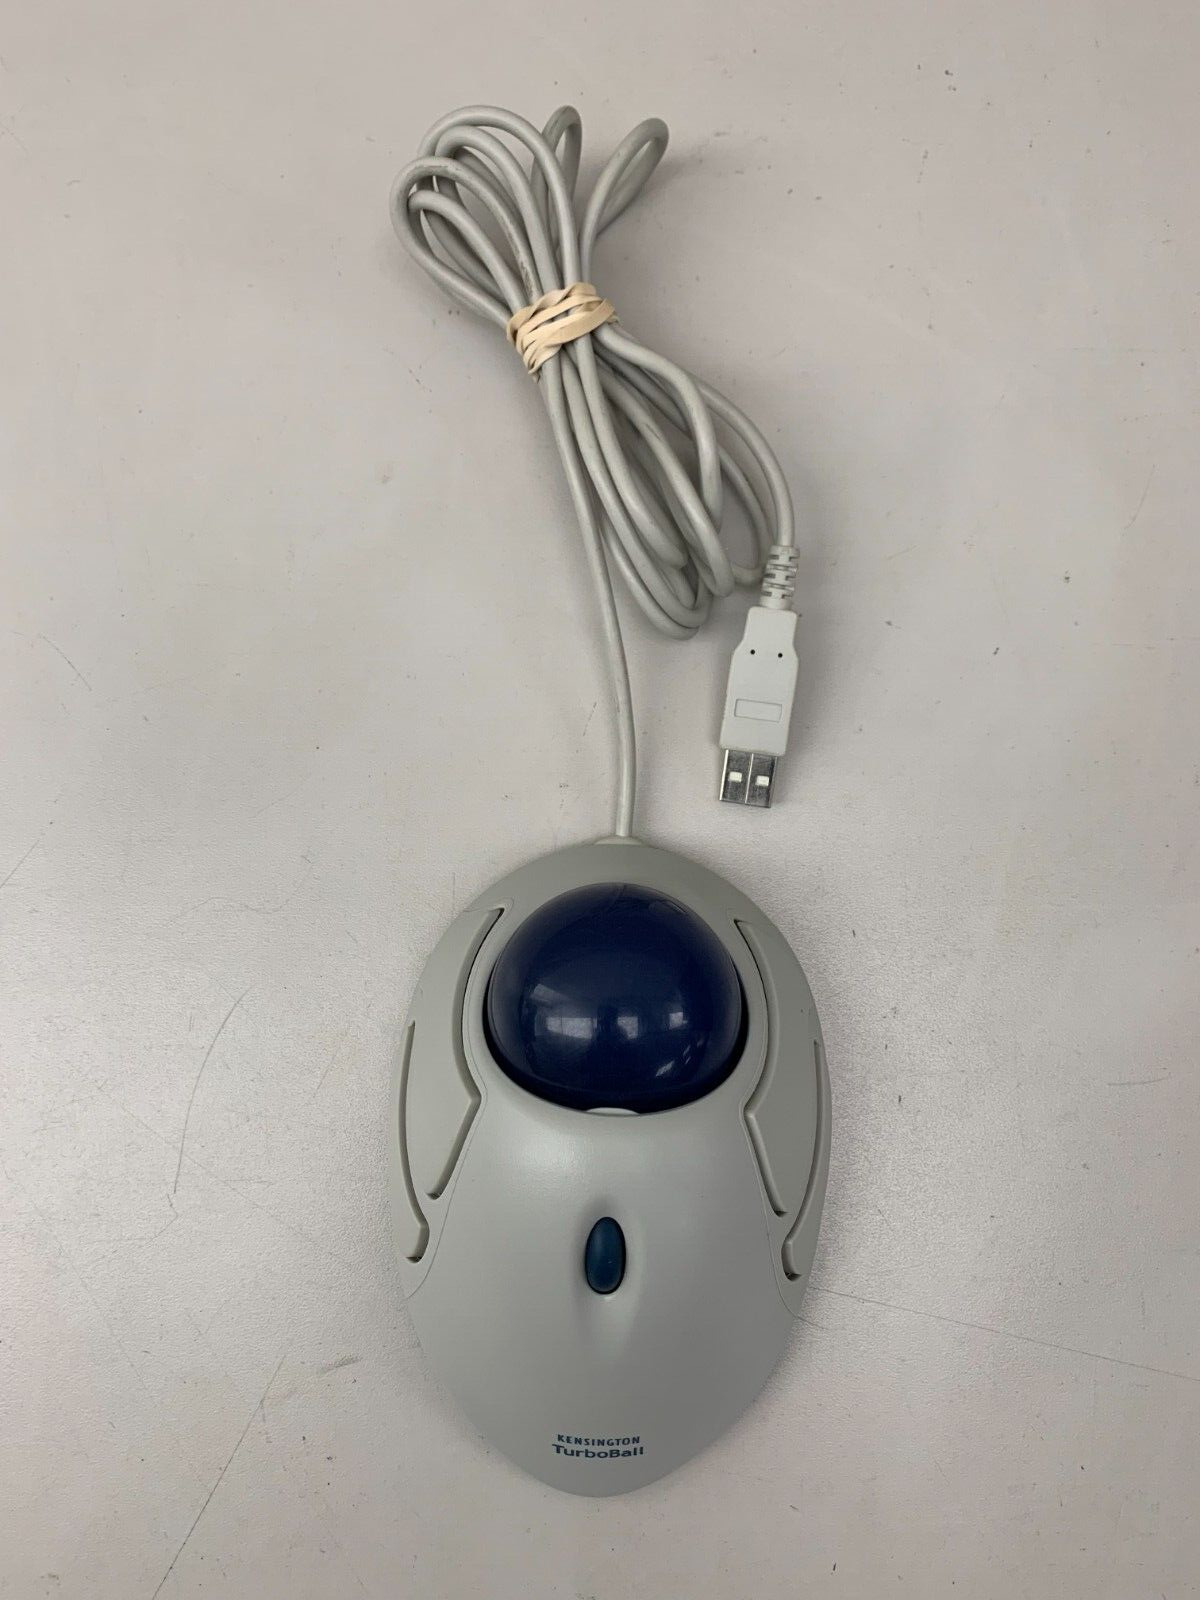 Kensington TurboBall Model 64227 Mouse USB | C1075